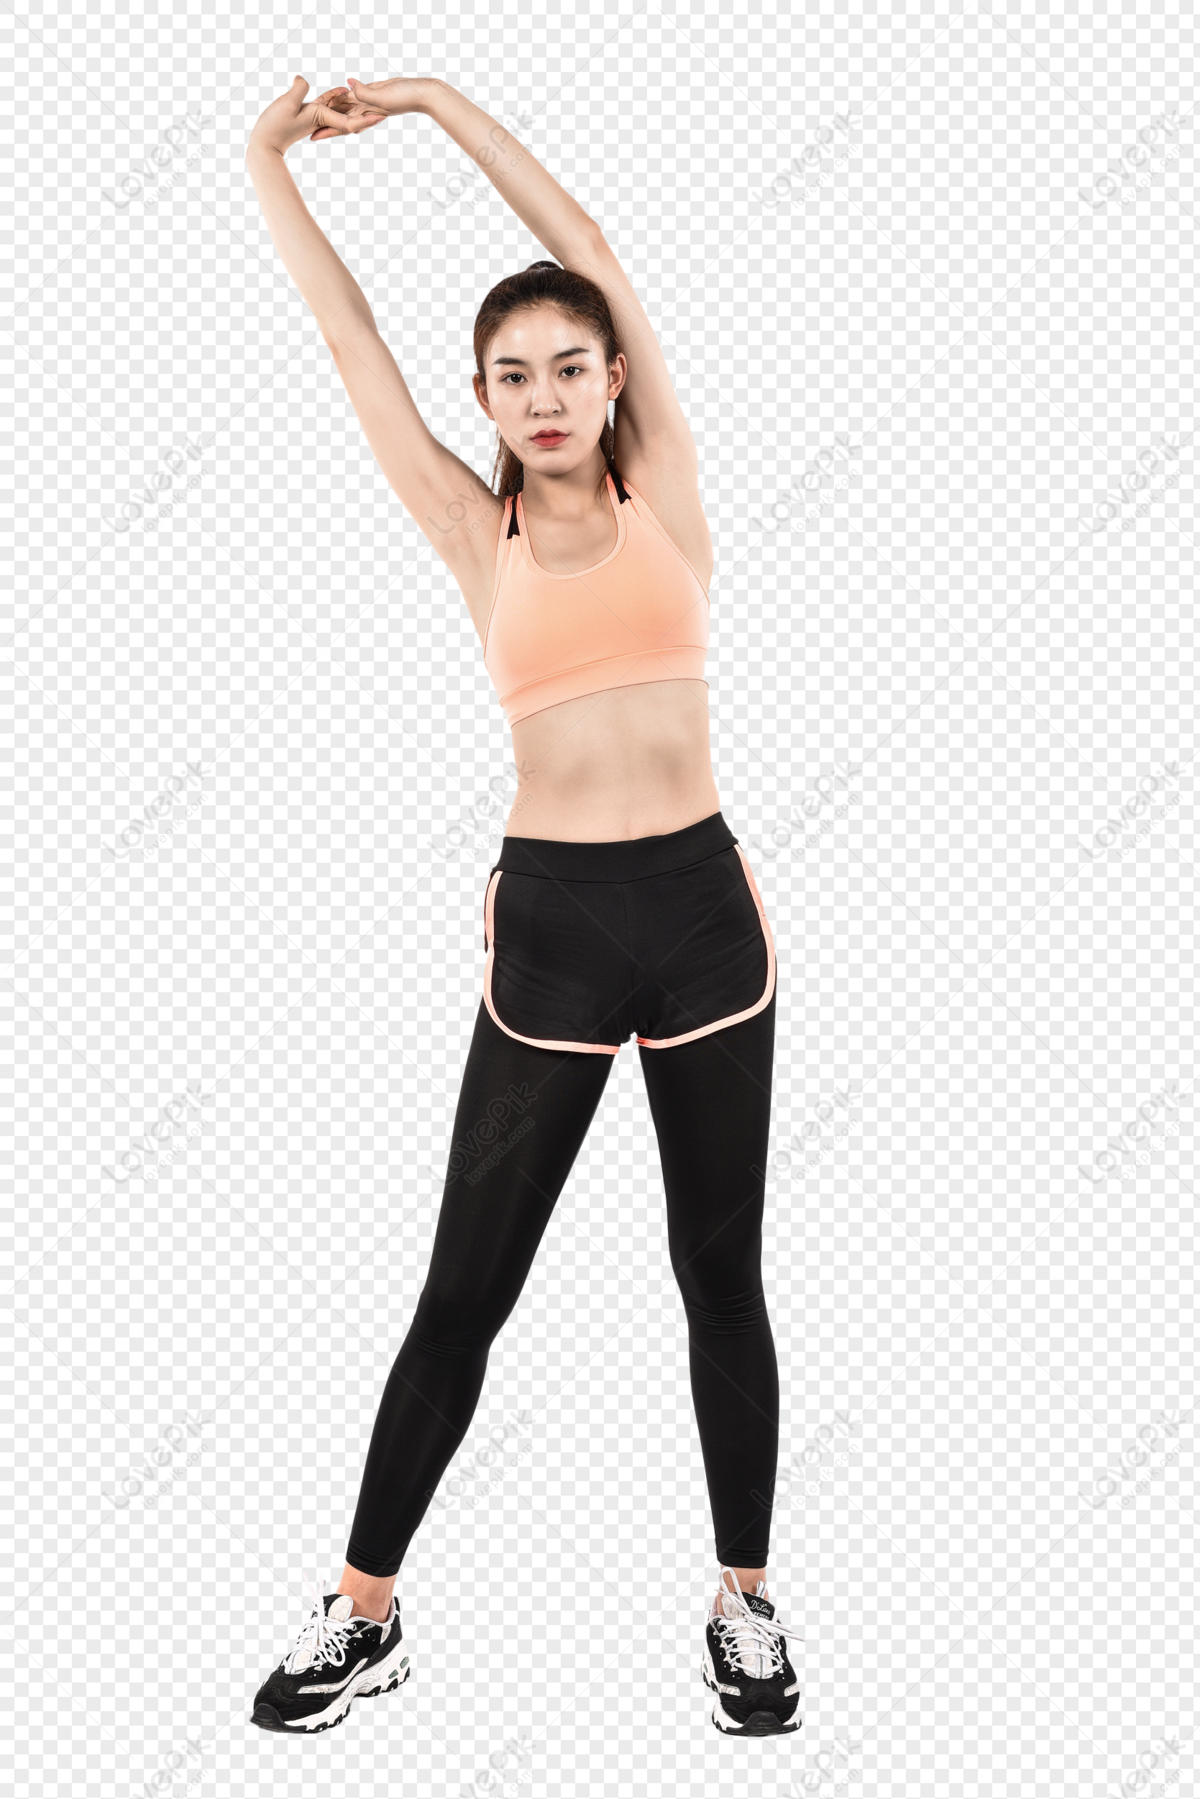 https://img.lovepik.com/free-png/20211214/lovepik-beautiful-woman-in-sportswear-stretching-png-image_401623374_wh1200.png